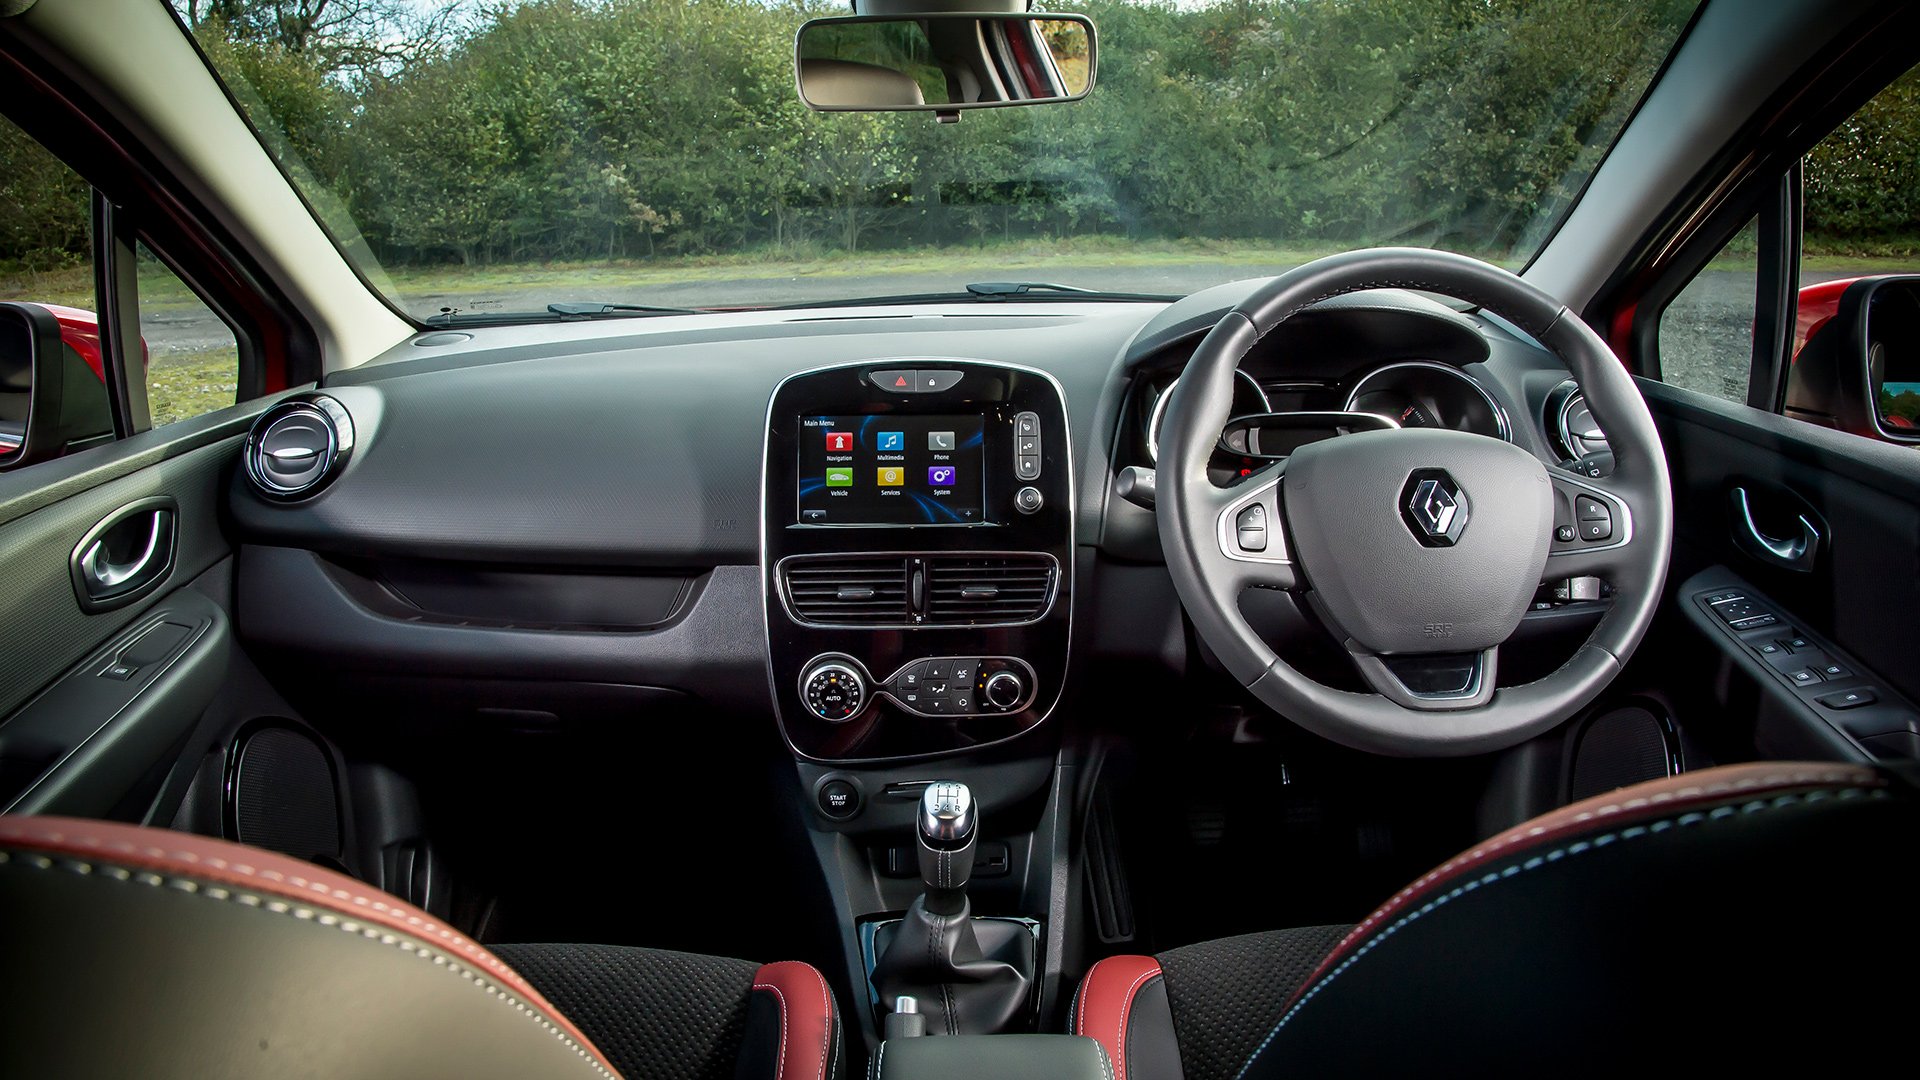 Renault Clio Hatchback (2016 - ) review | AutoTrader